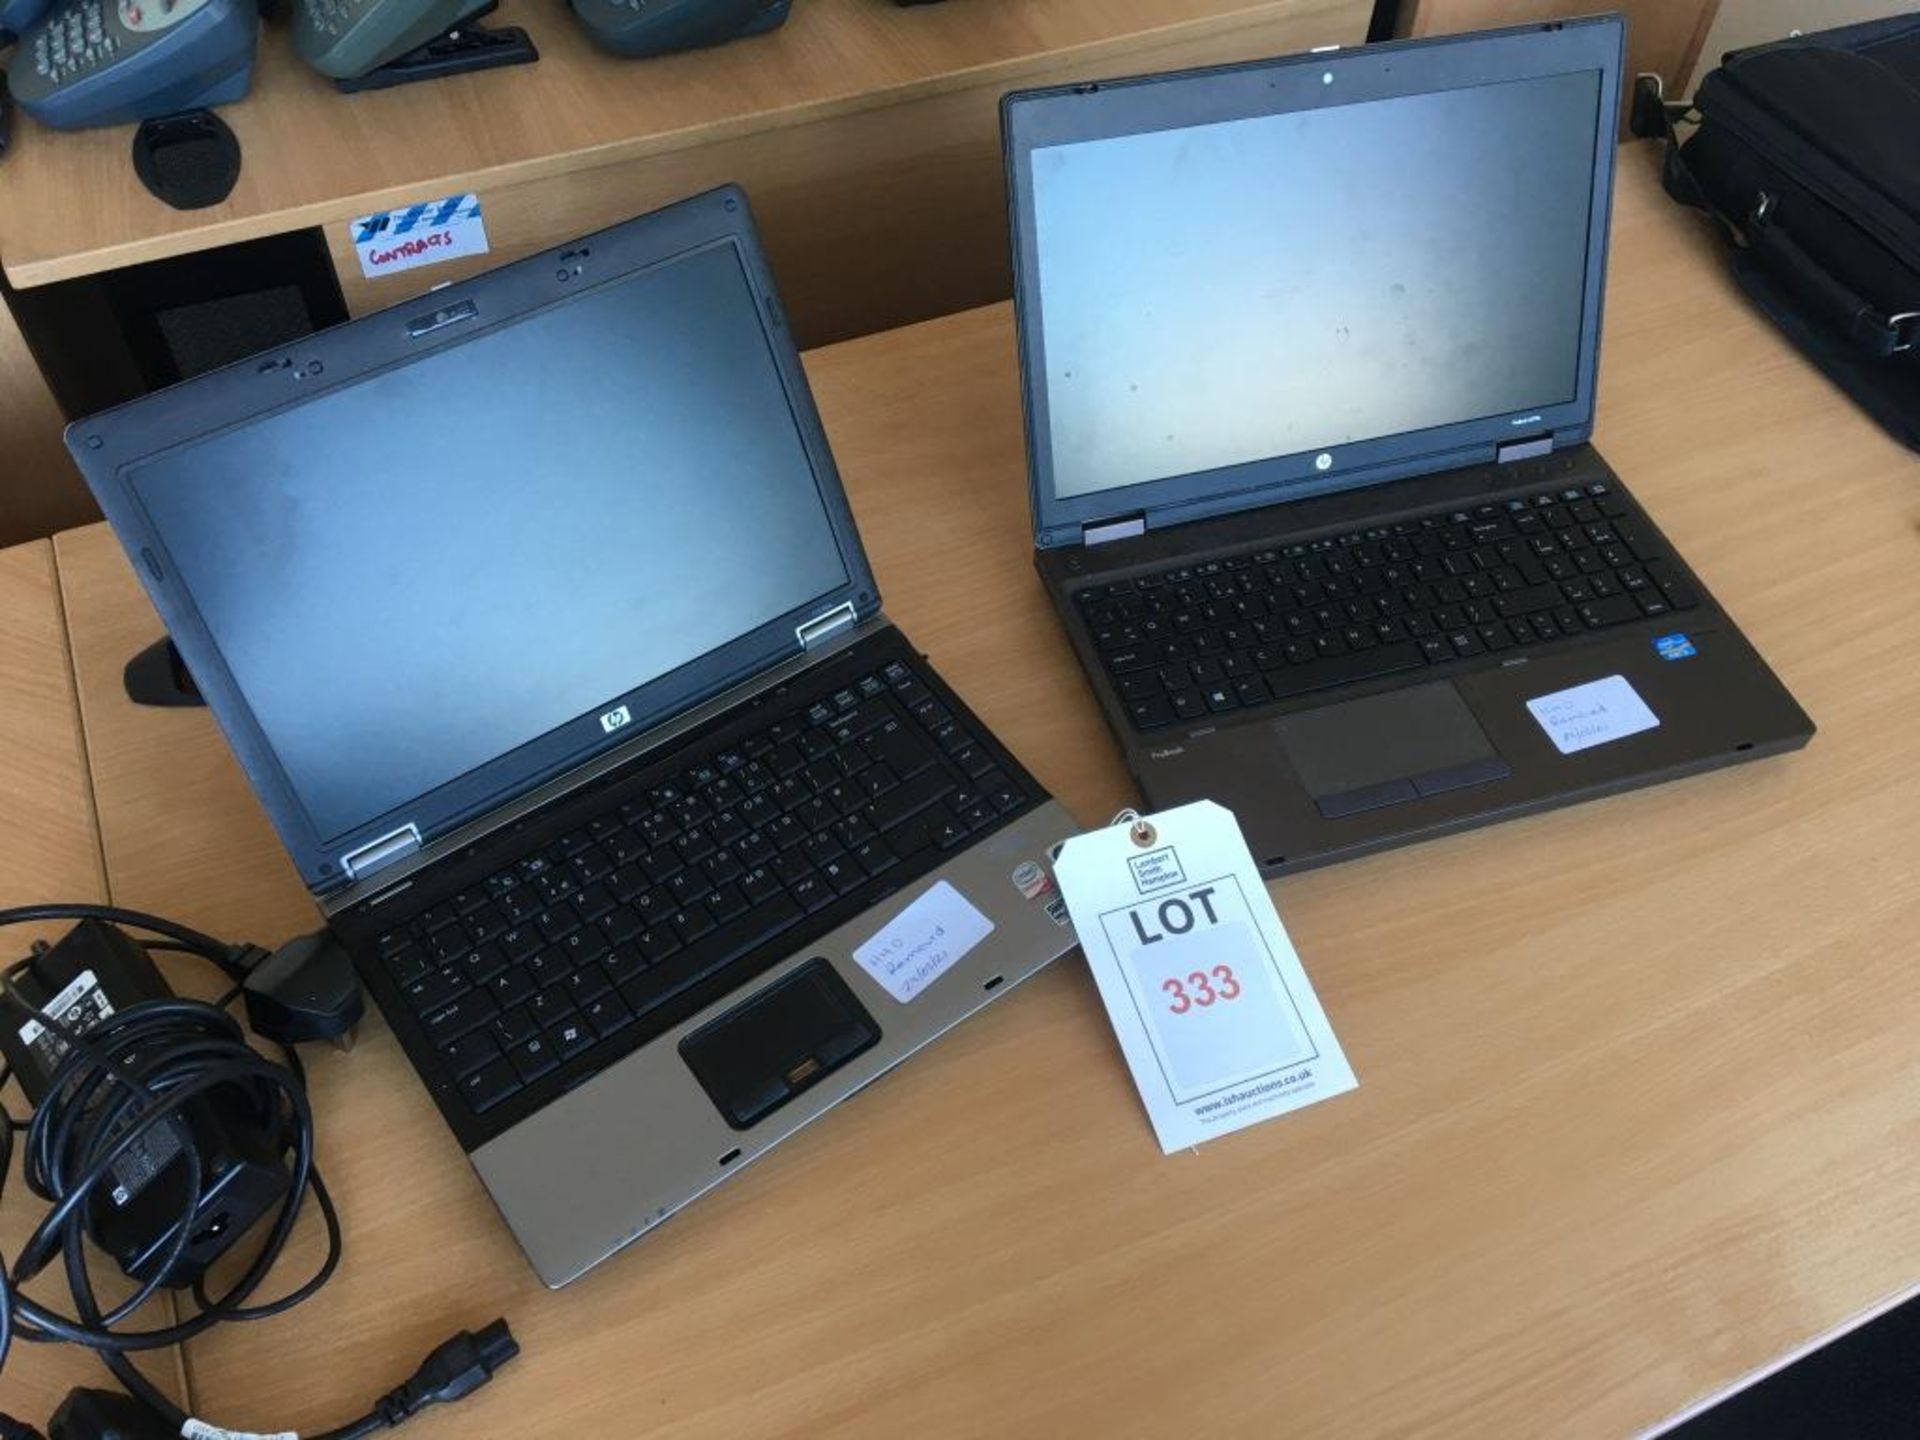 A HP 6530B laptop computer (Windows Vista, Intel Centrino 2 processor) and a HP Probook 6570B laptop - Image 2 of 4